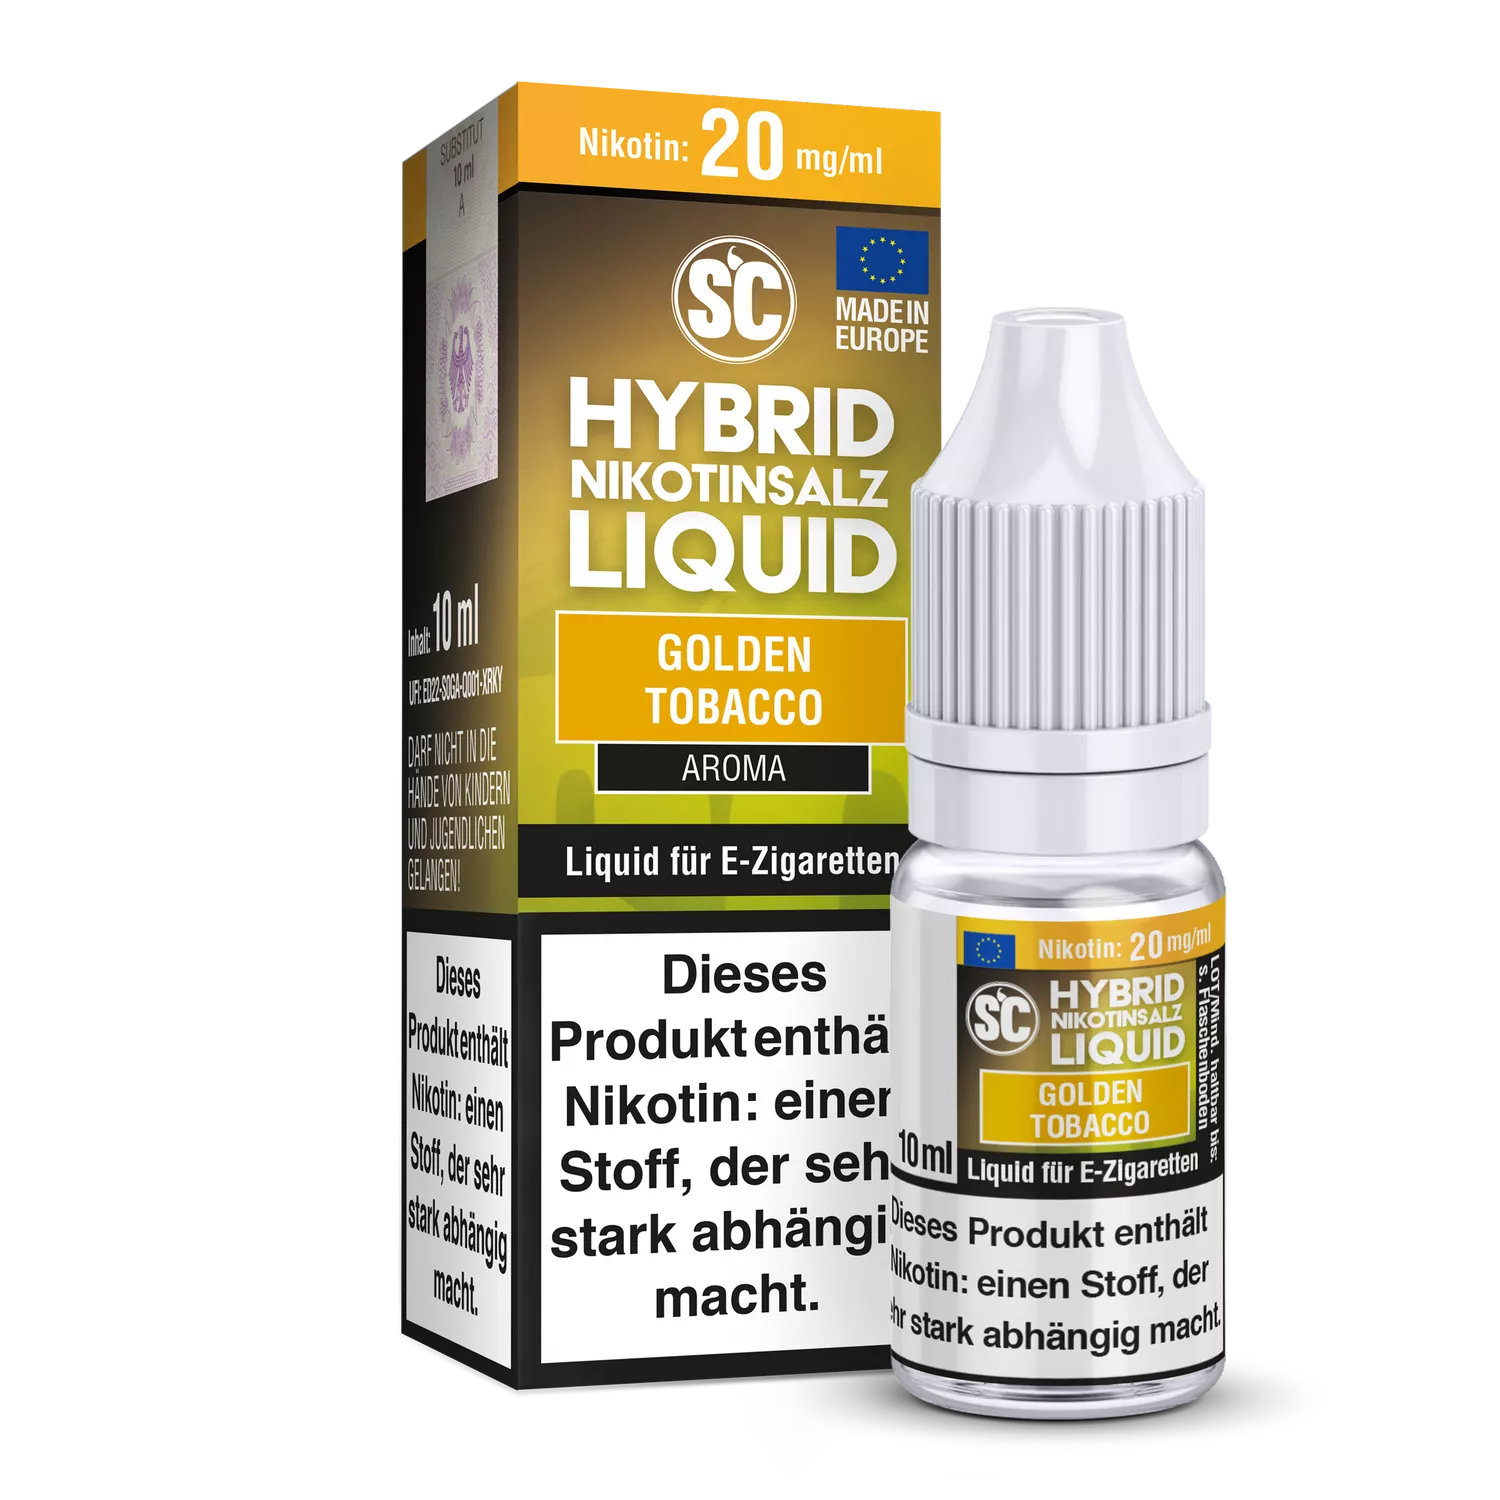 SC Hybrid Nikotinsalz Liquid Golden Tobacco - 20mg/ml